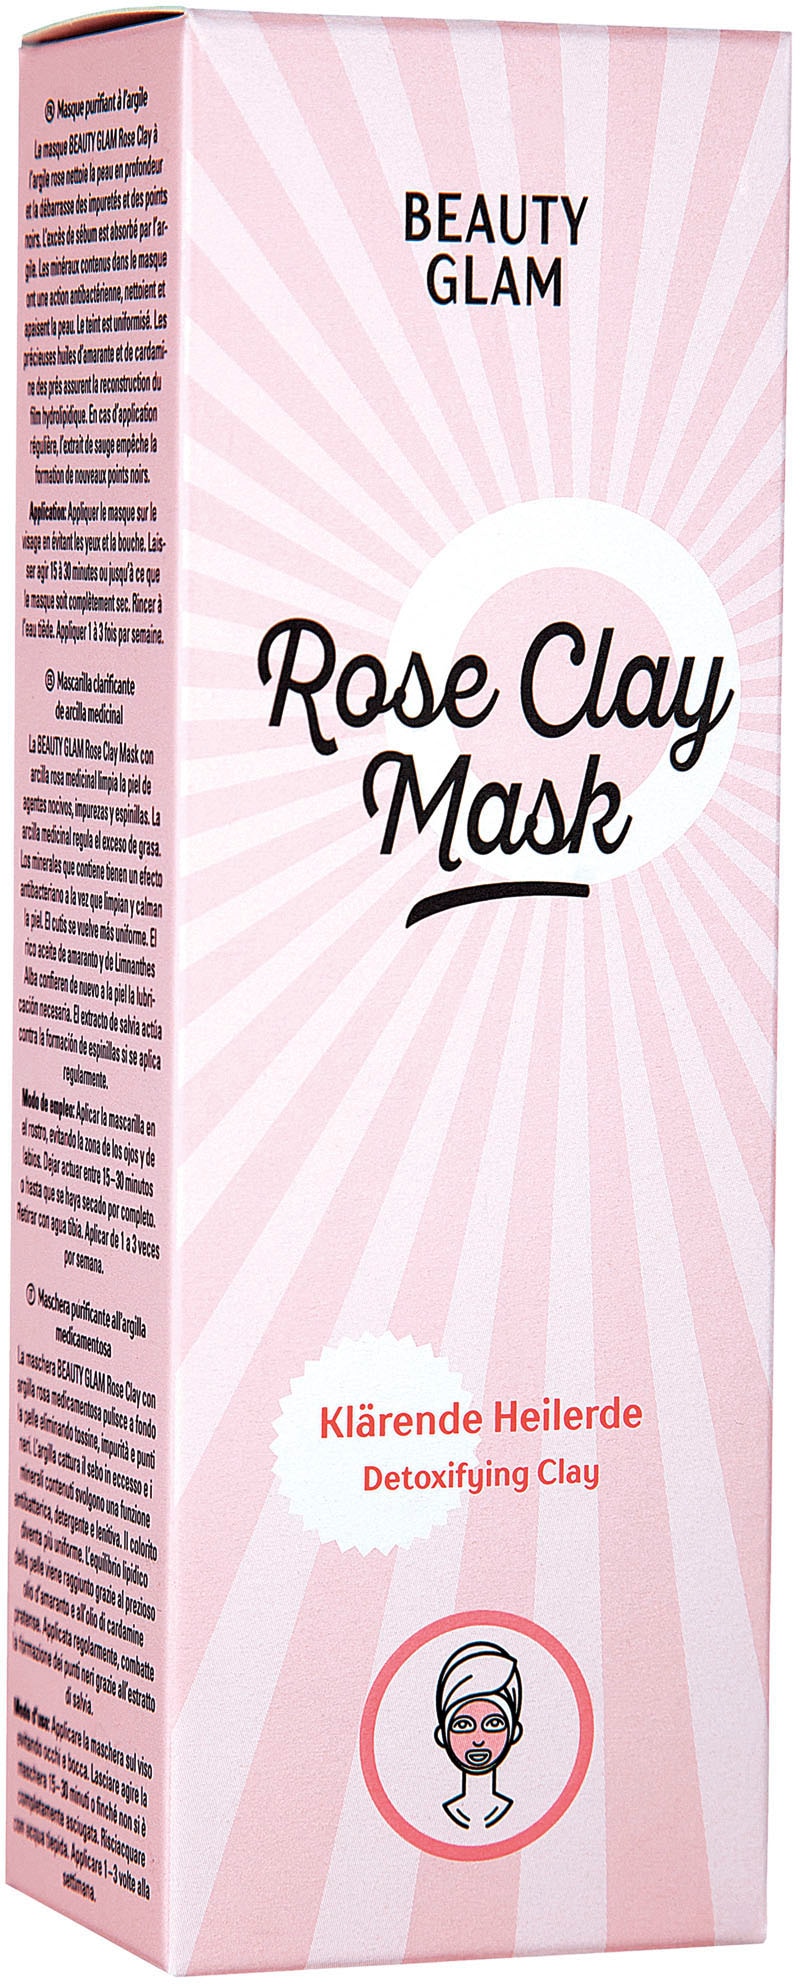 BEAUTY GLAM Gesichtsmaske »Beauty Glam Rose Clay Mask«